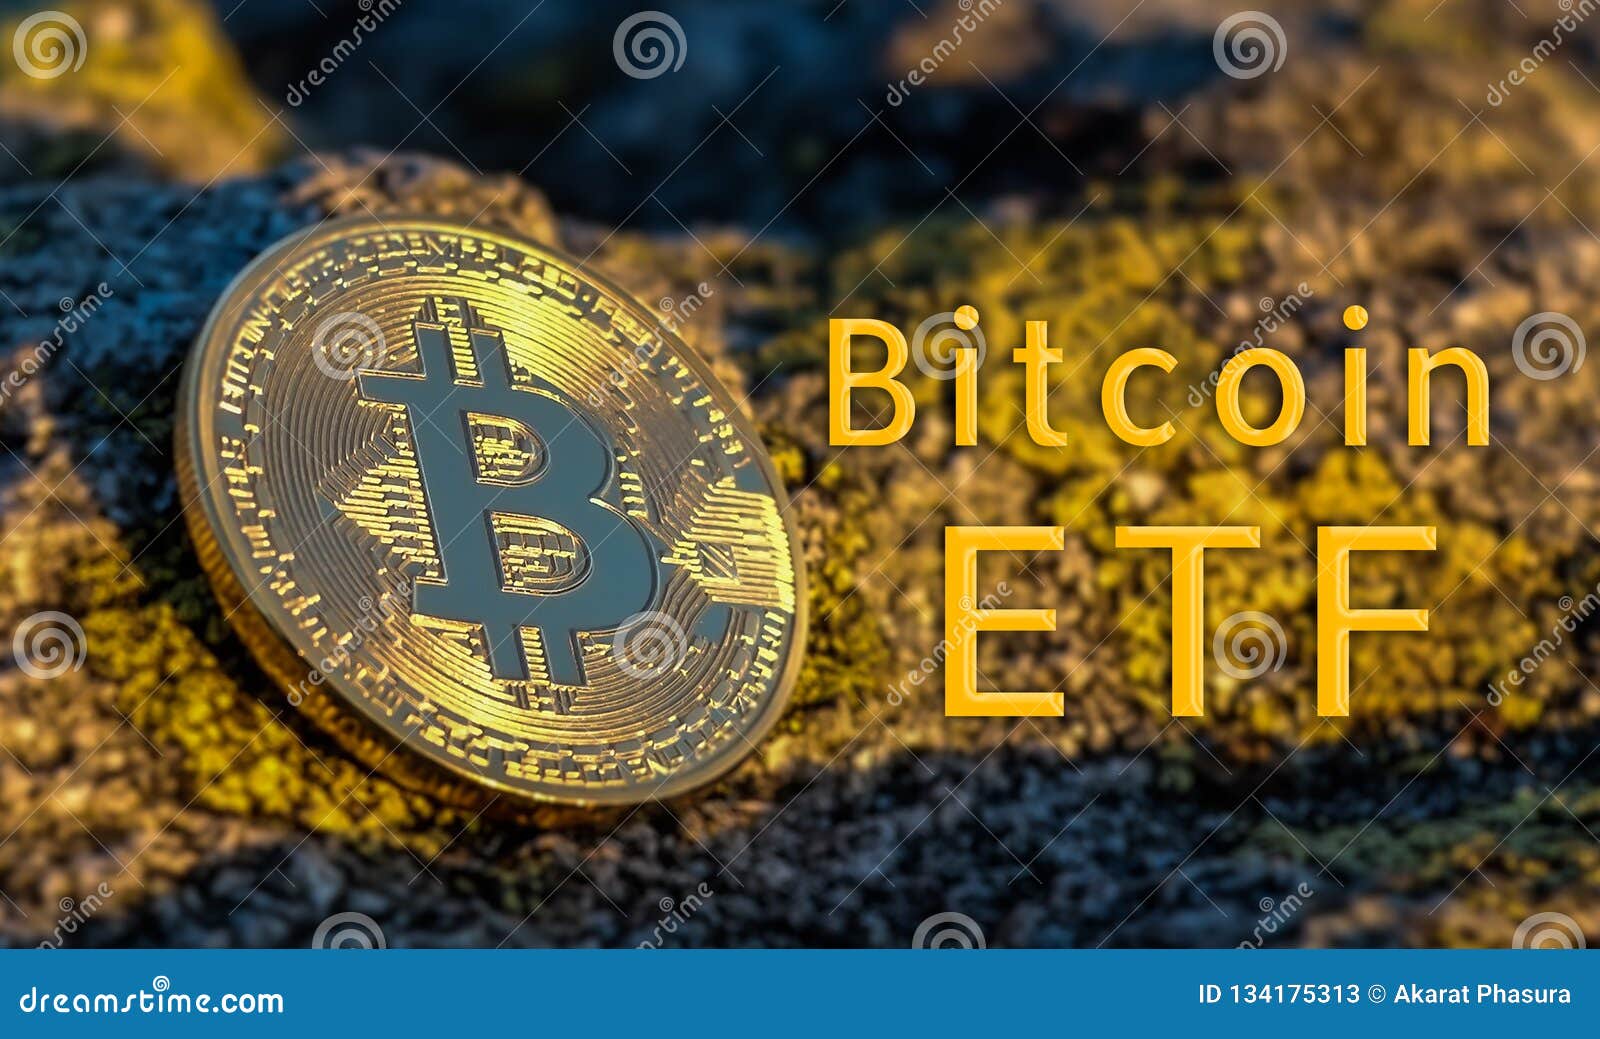 bitcoin fund stock